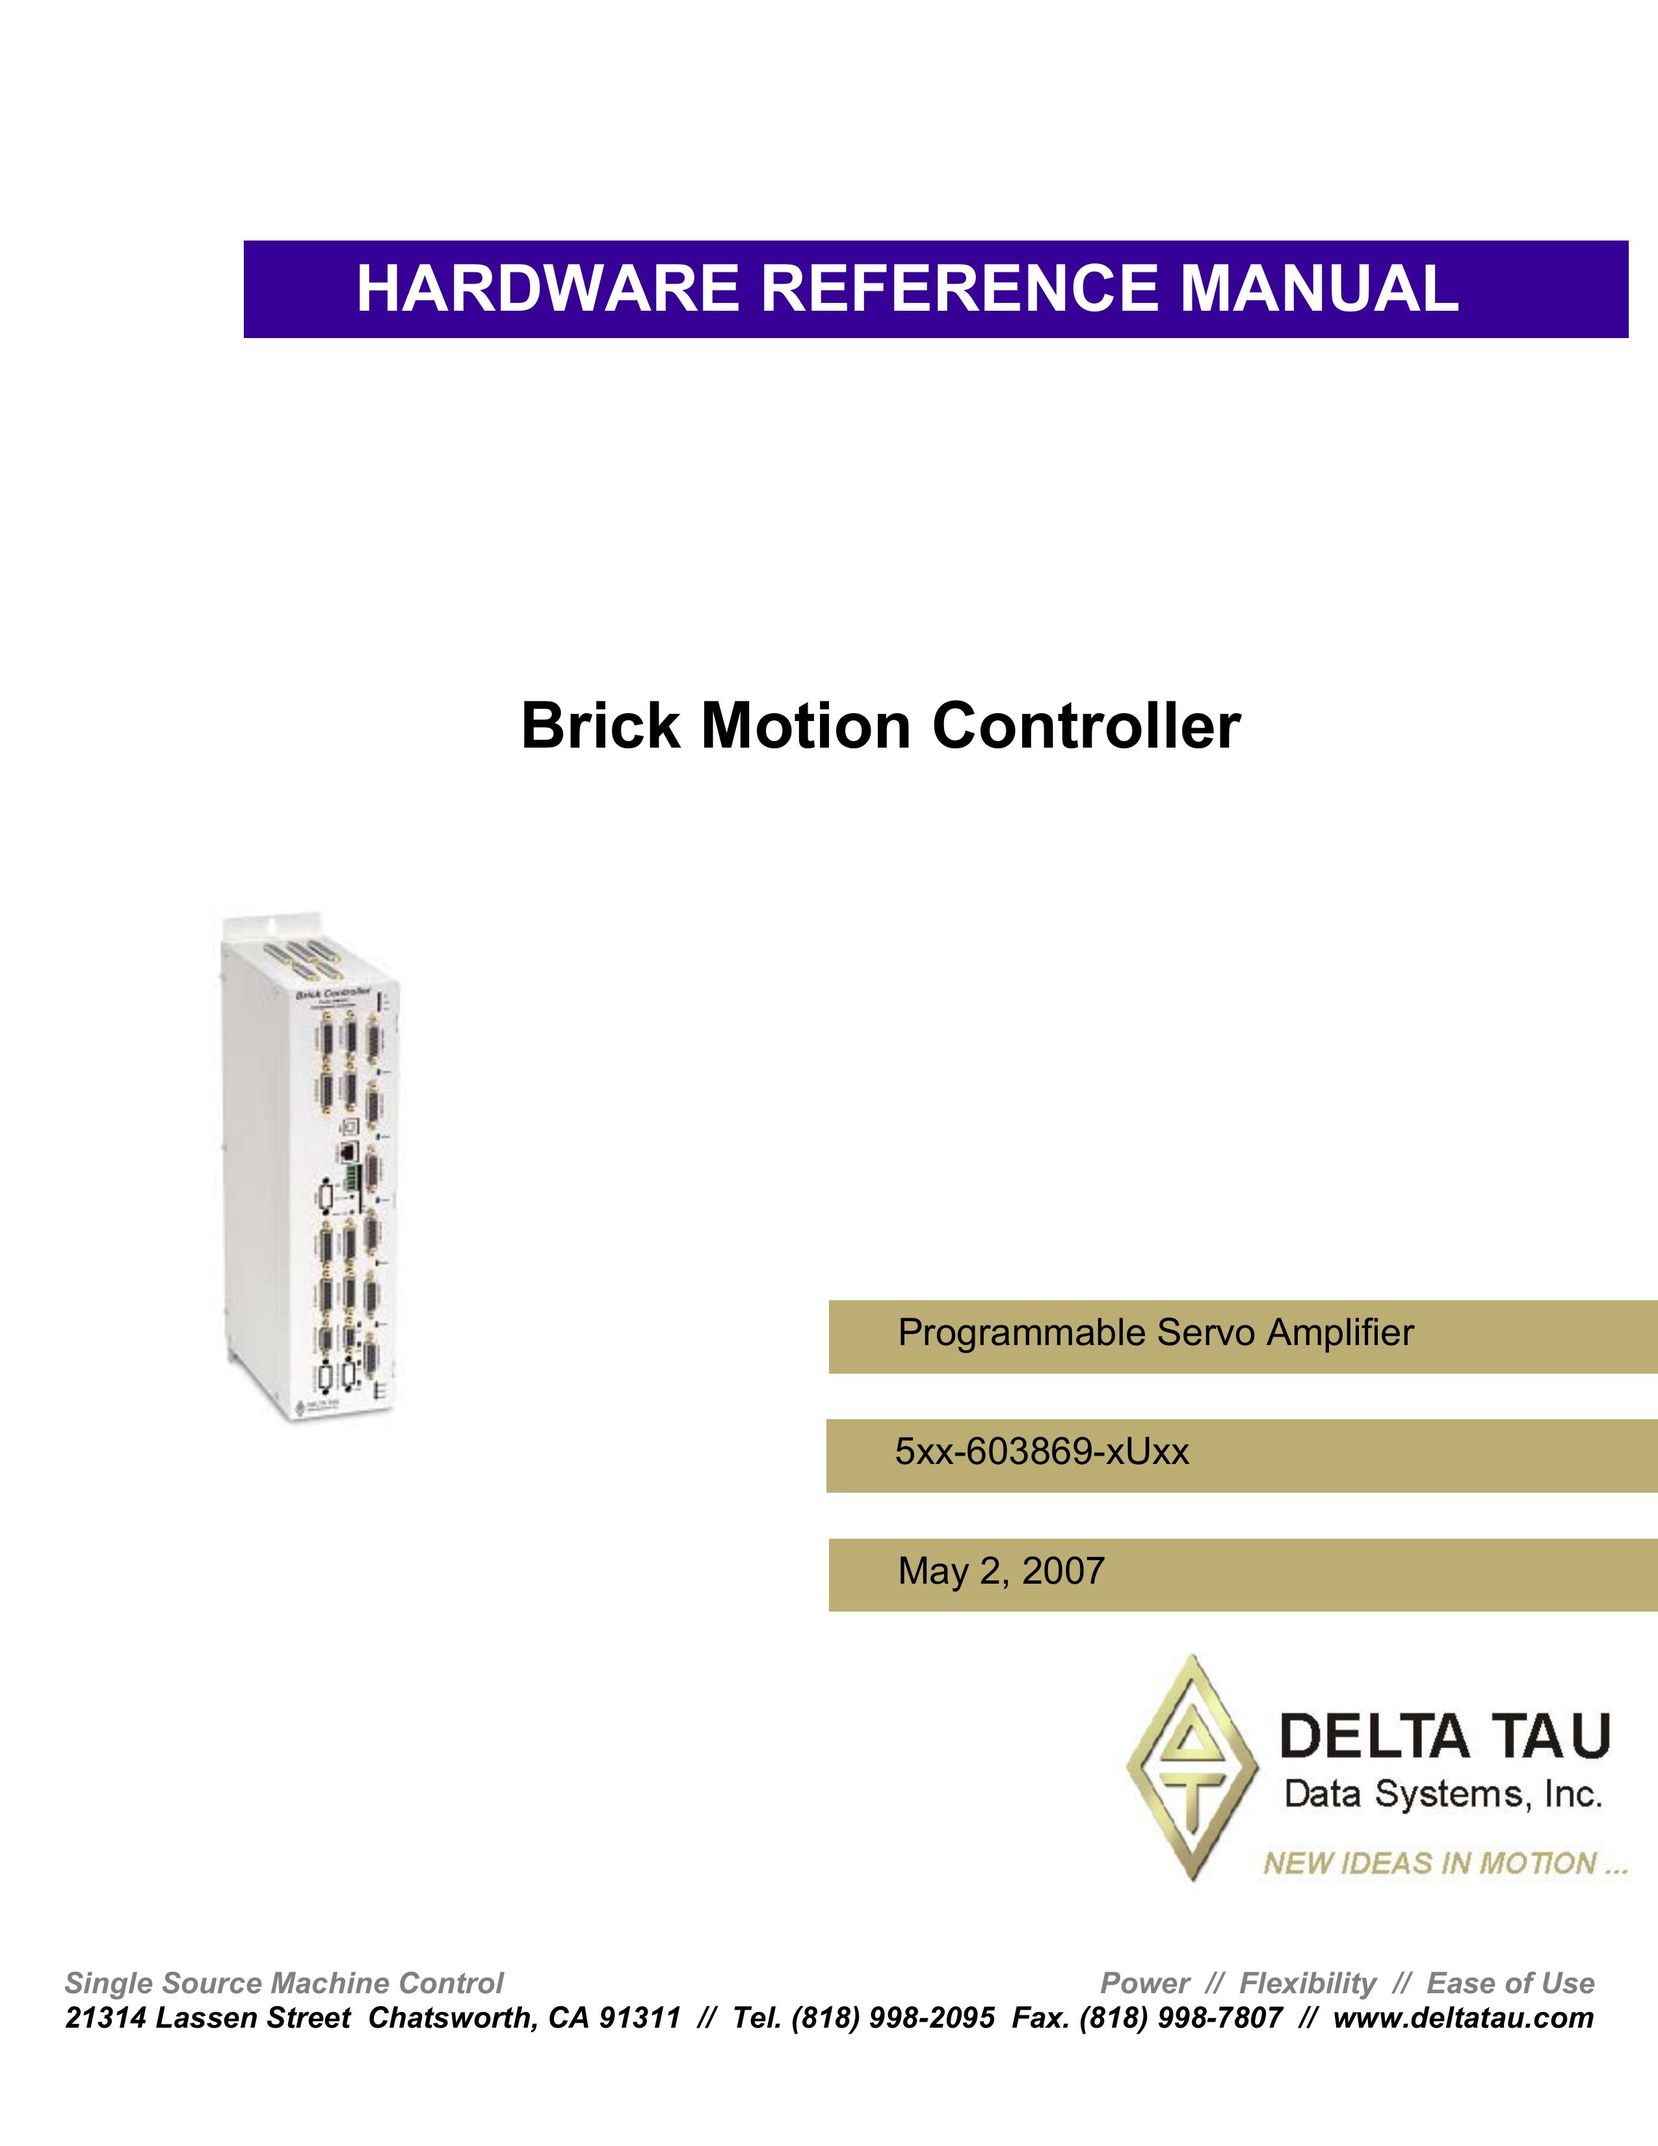 Delta Tau 5xx-603869-xUxx Computer Hardware User Manual